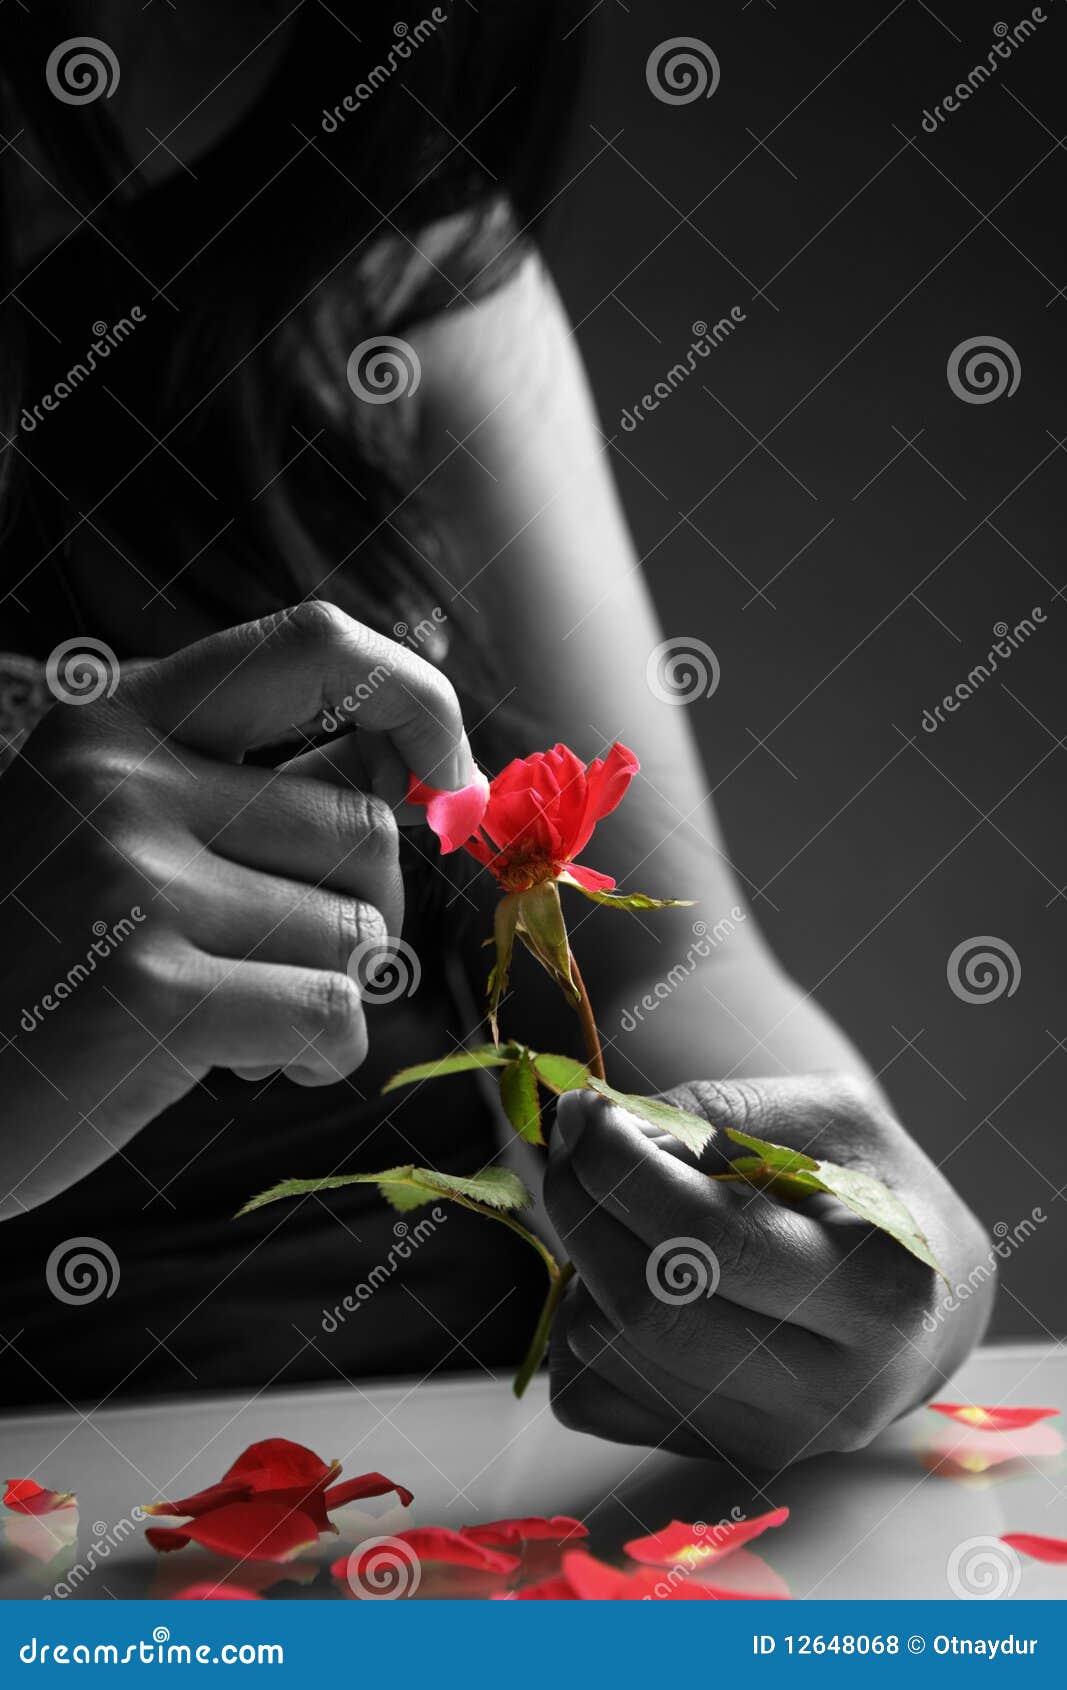 Broken Heart Girl Picking Rose Petals Stock Photo - Image of ...